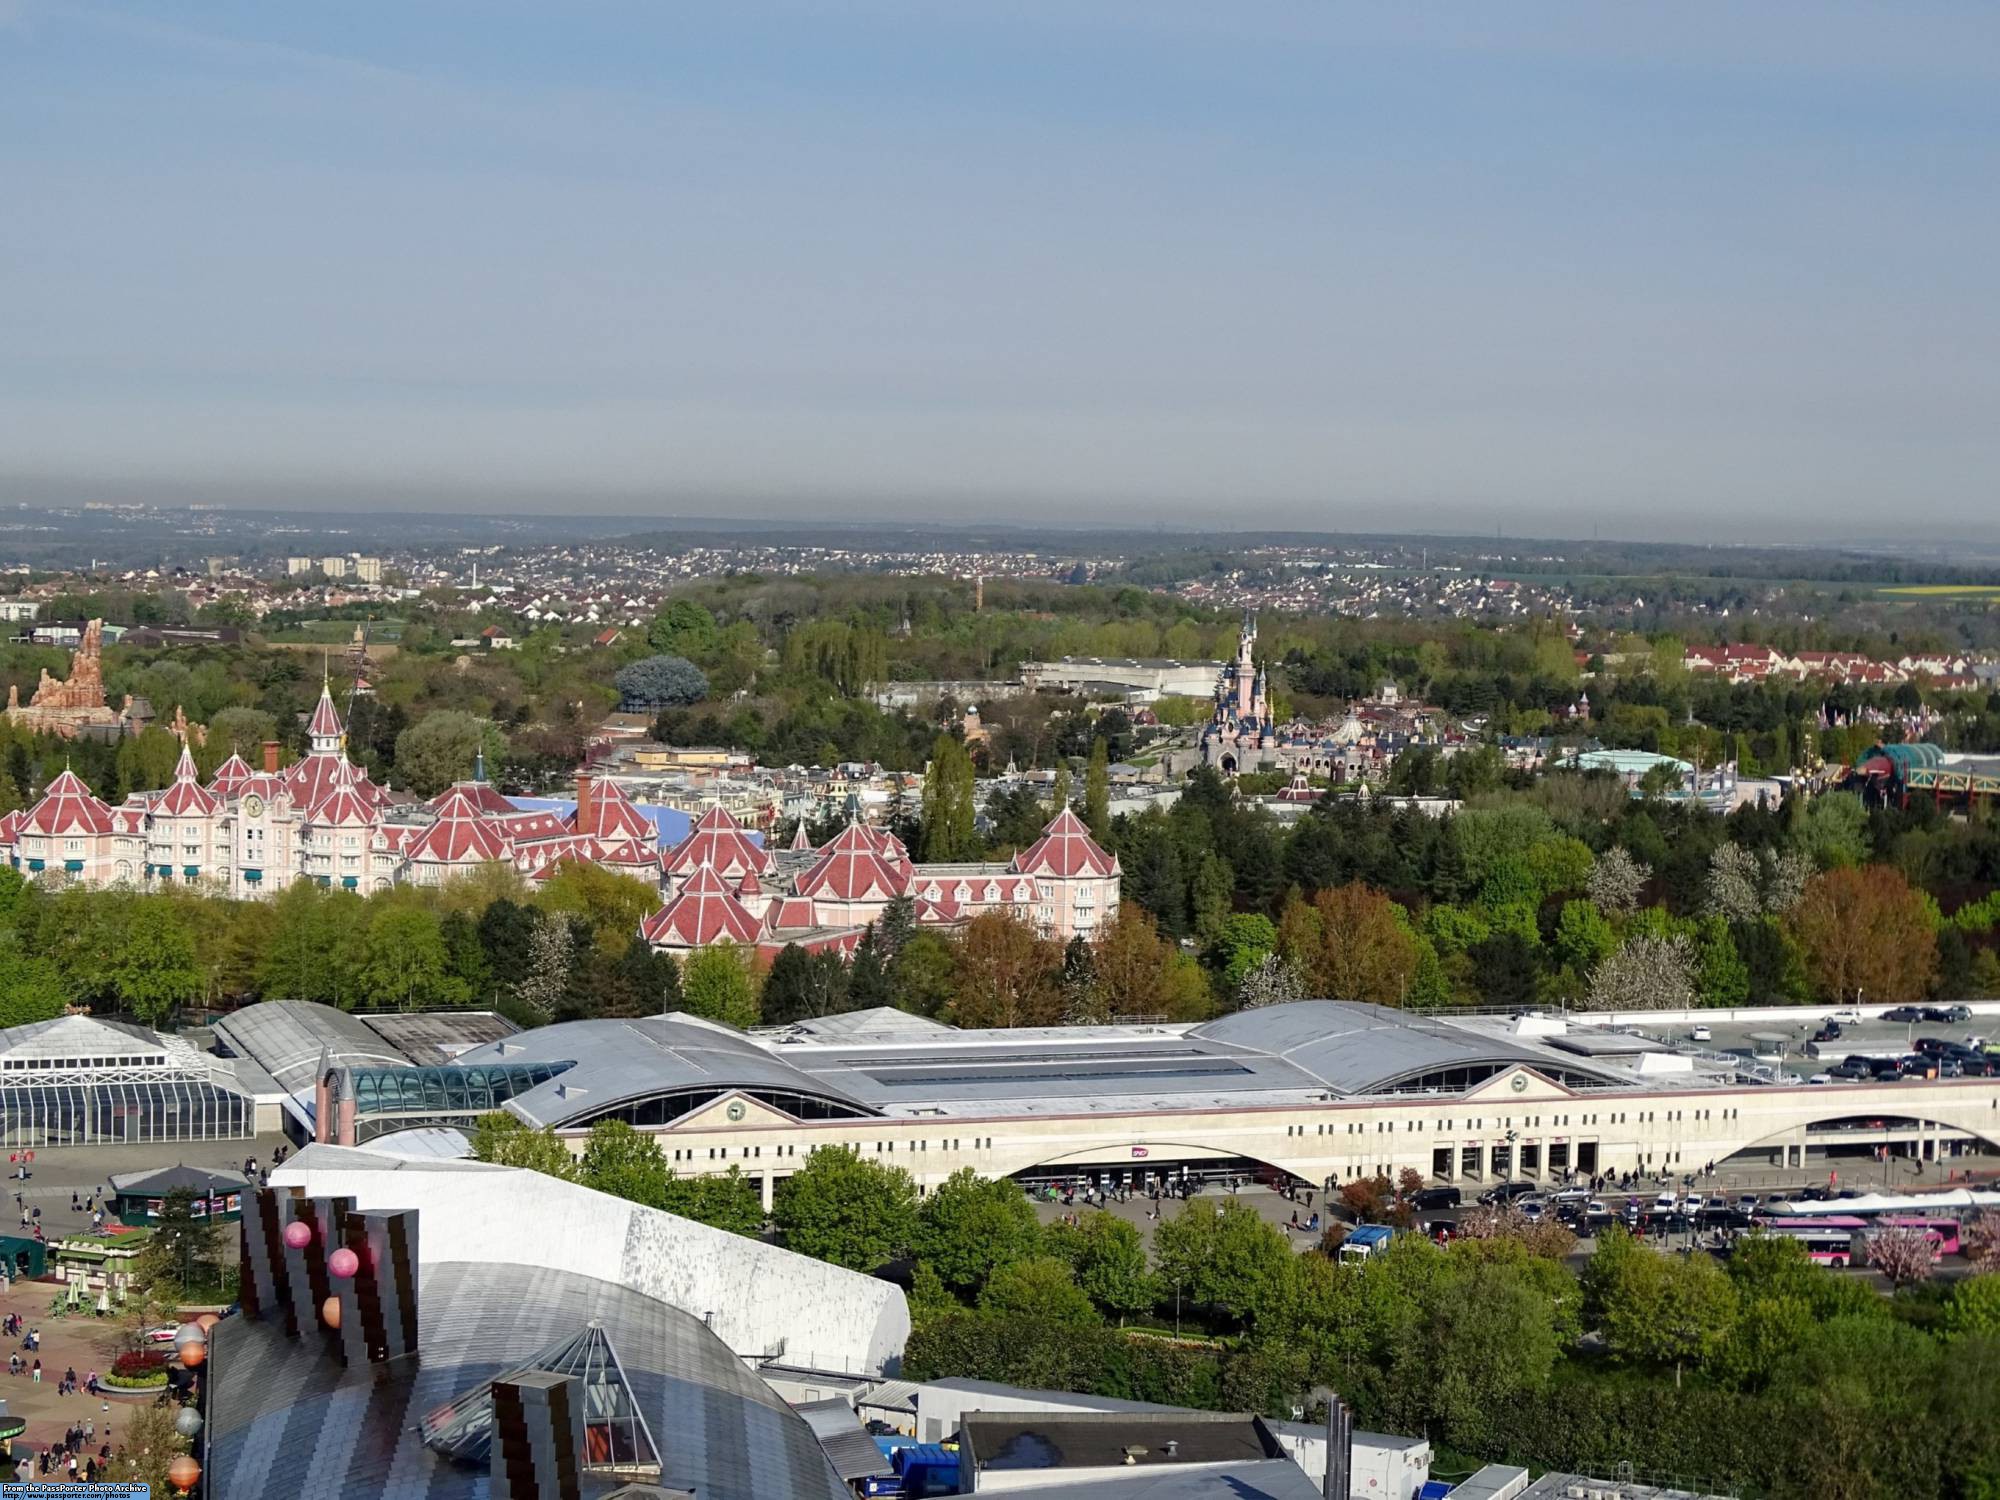 Disneyland Paris - Panoramagique balloon views